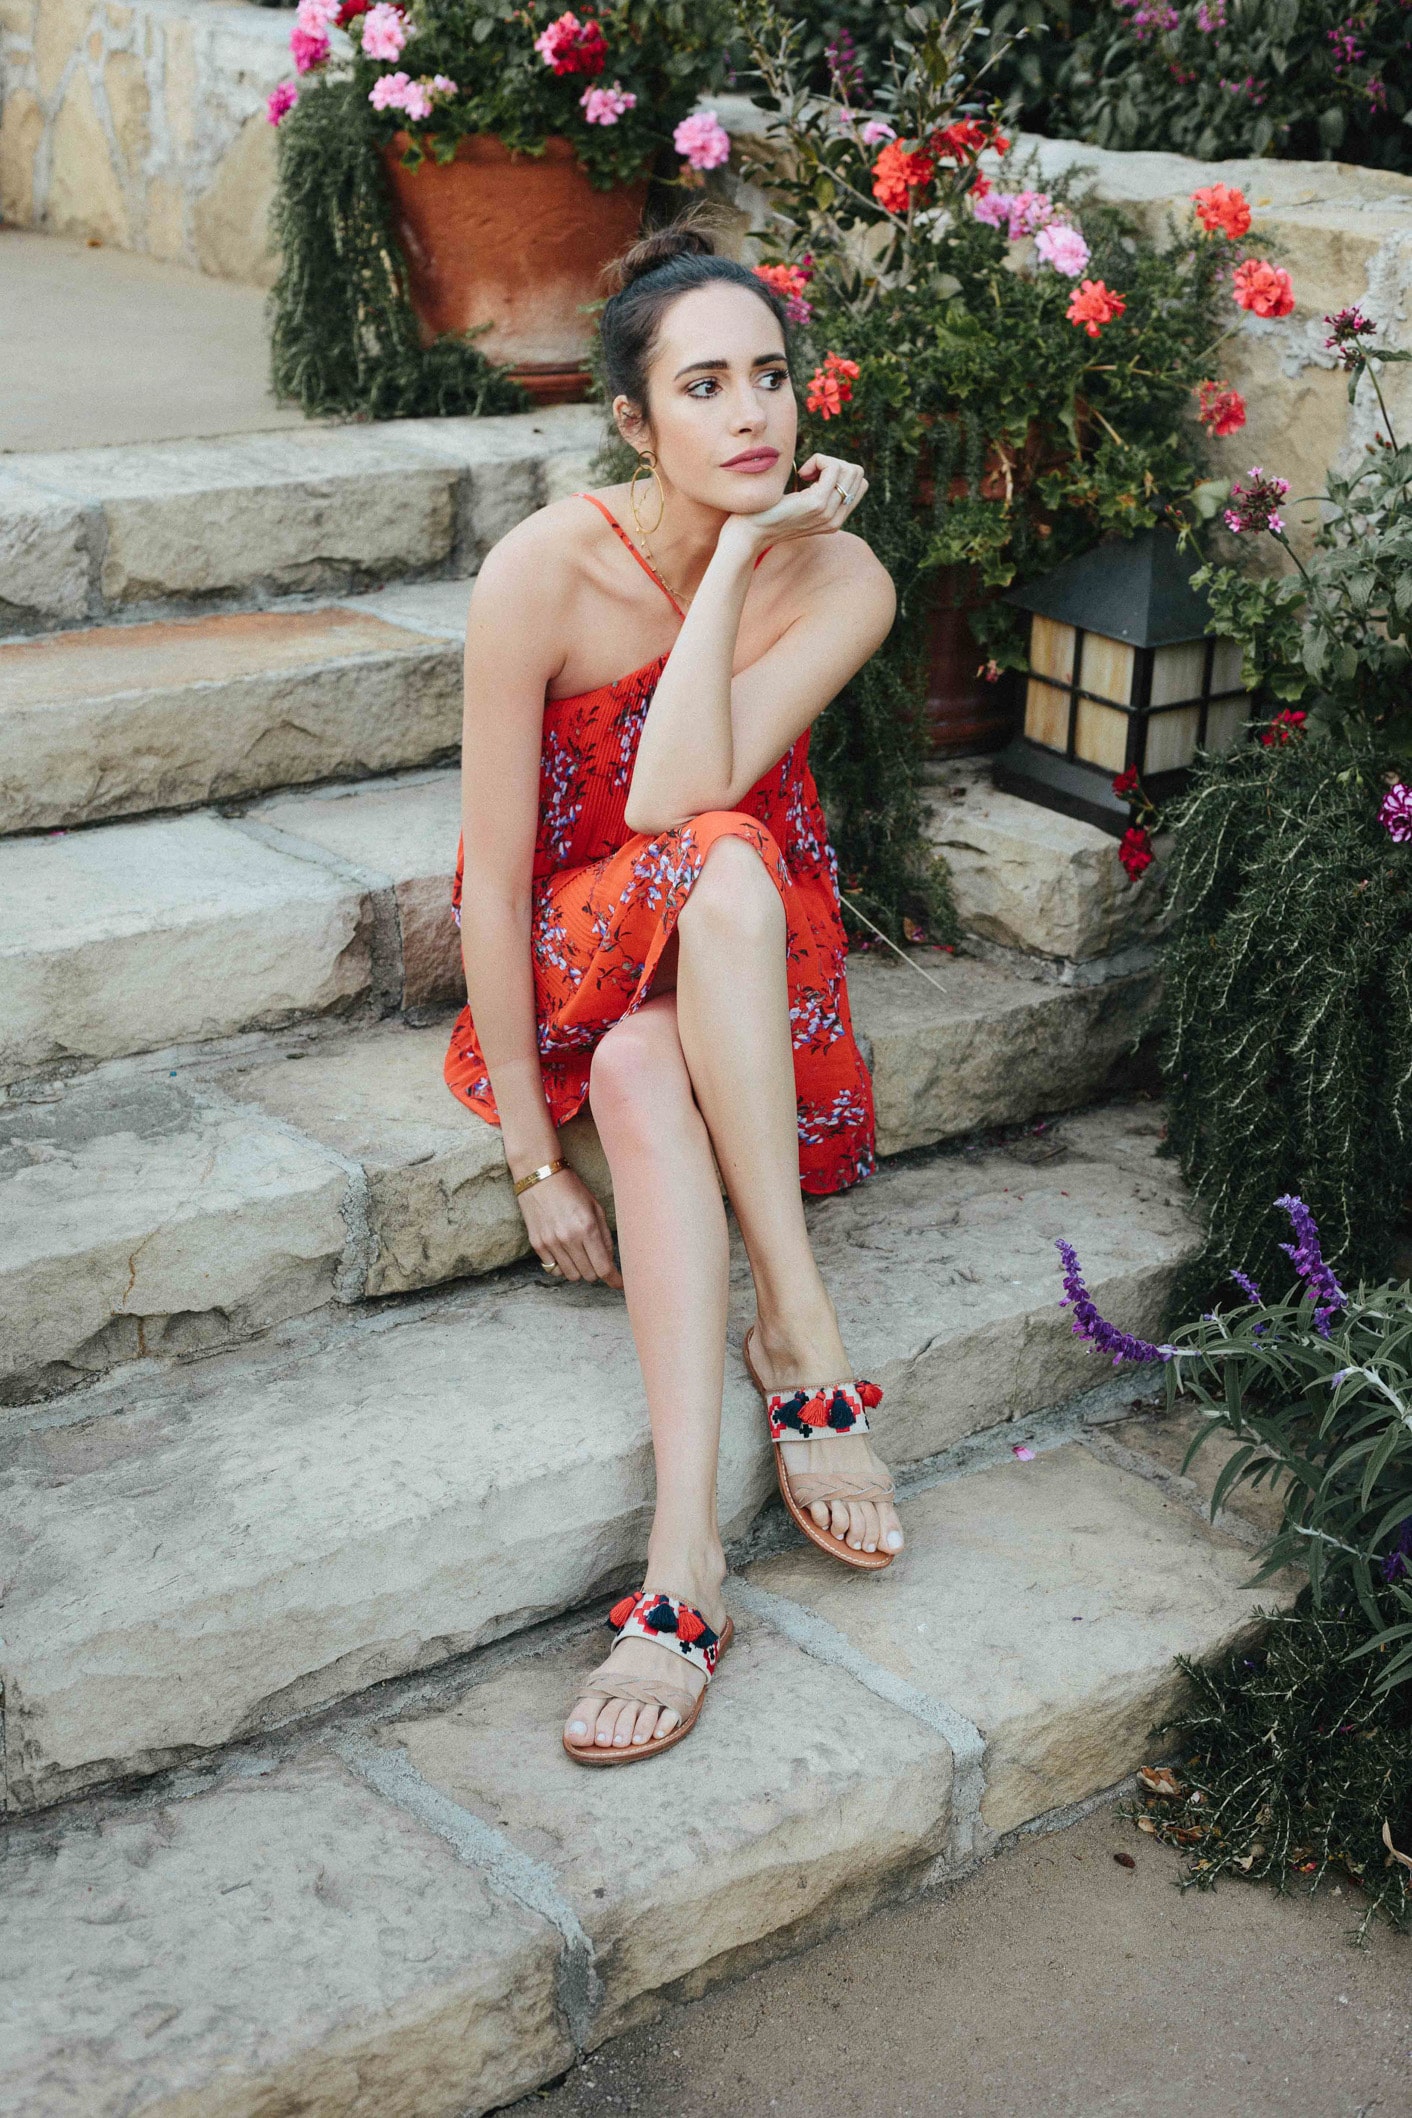 Louise Roe wearing red Spanish style summer dress in Santa Barbara